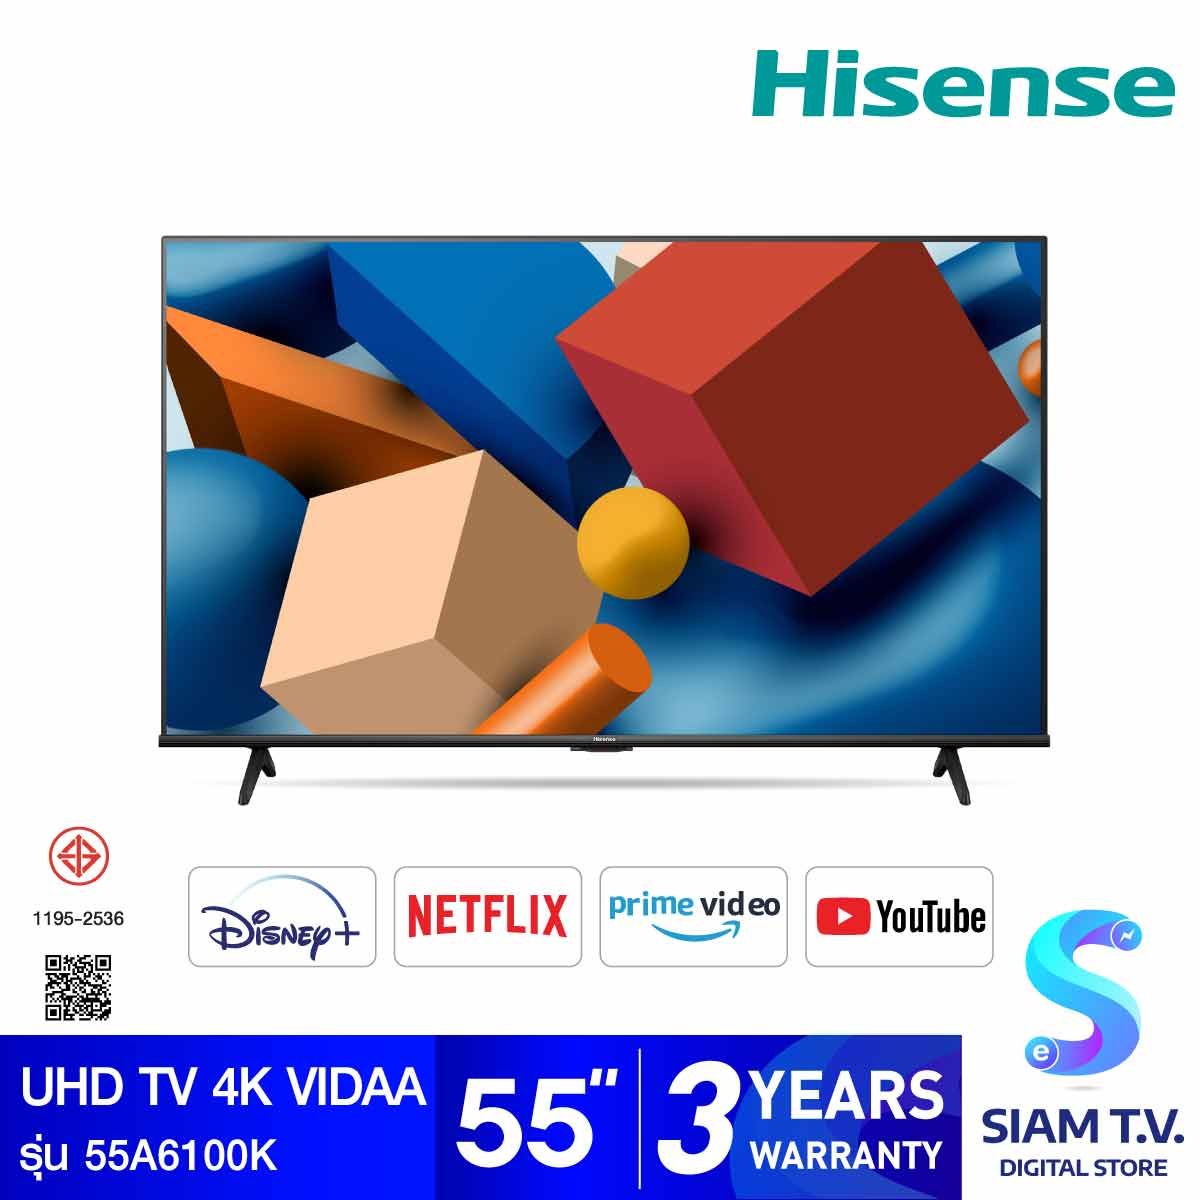 Hisense  LED UHD TV 4K VIDAA  รุ่น  55A6100K สมาร์ททีวี 4K ขนาด 55 นิ้ว